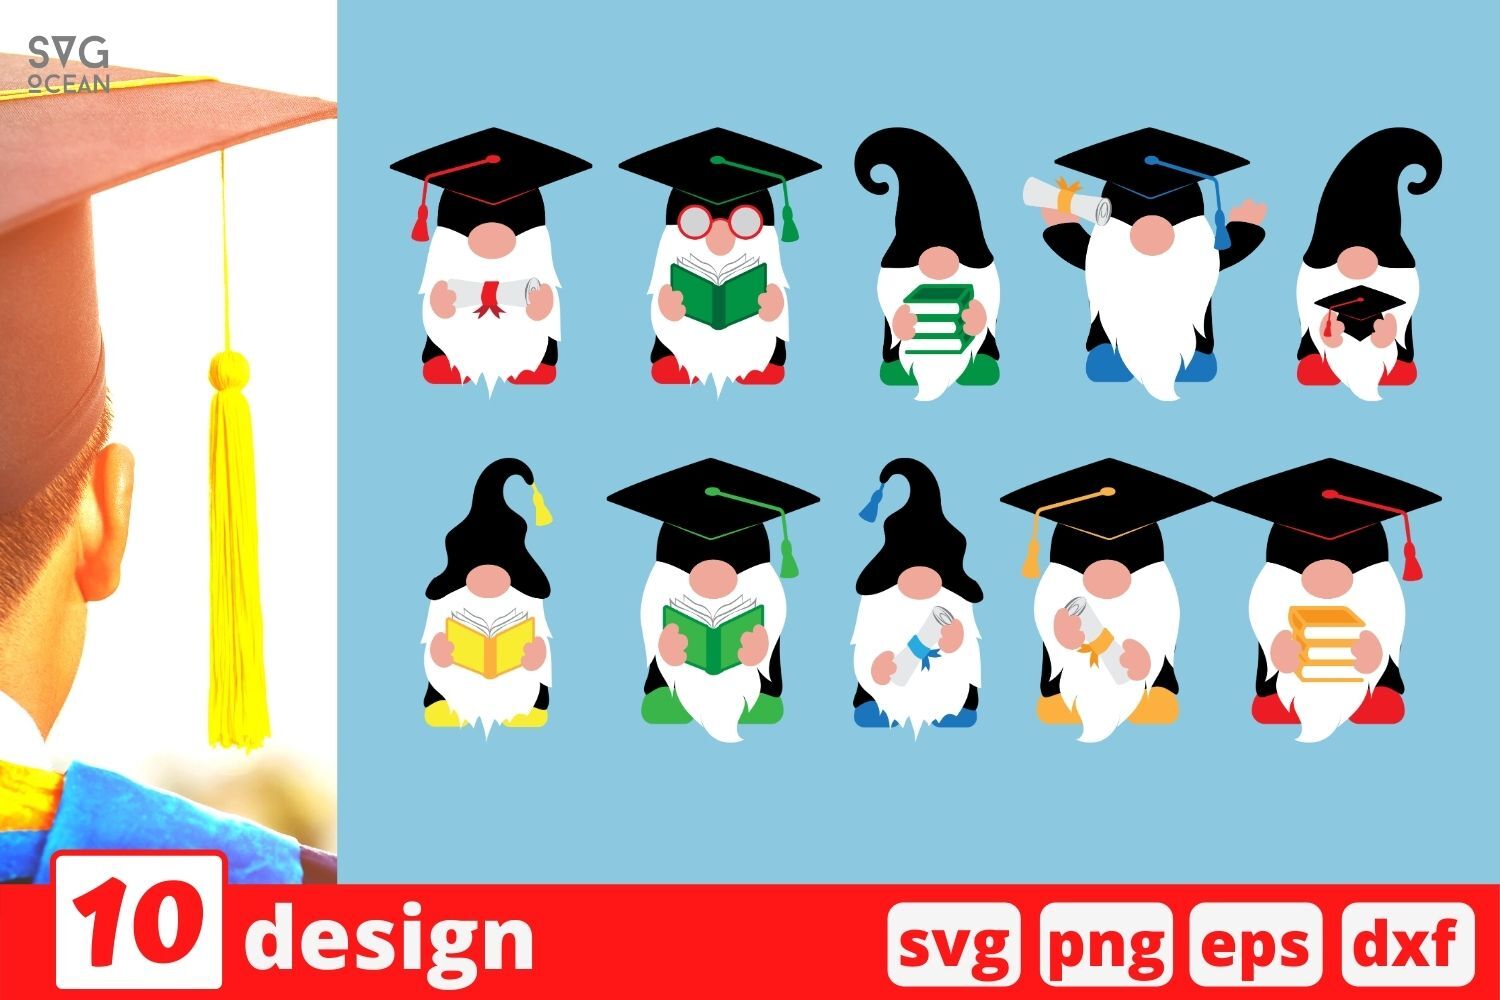 Download Graduation Gnome Svg Bundle By Svgocean Thehungryjpeg Com